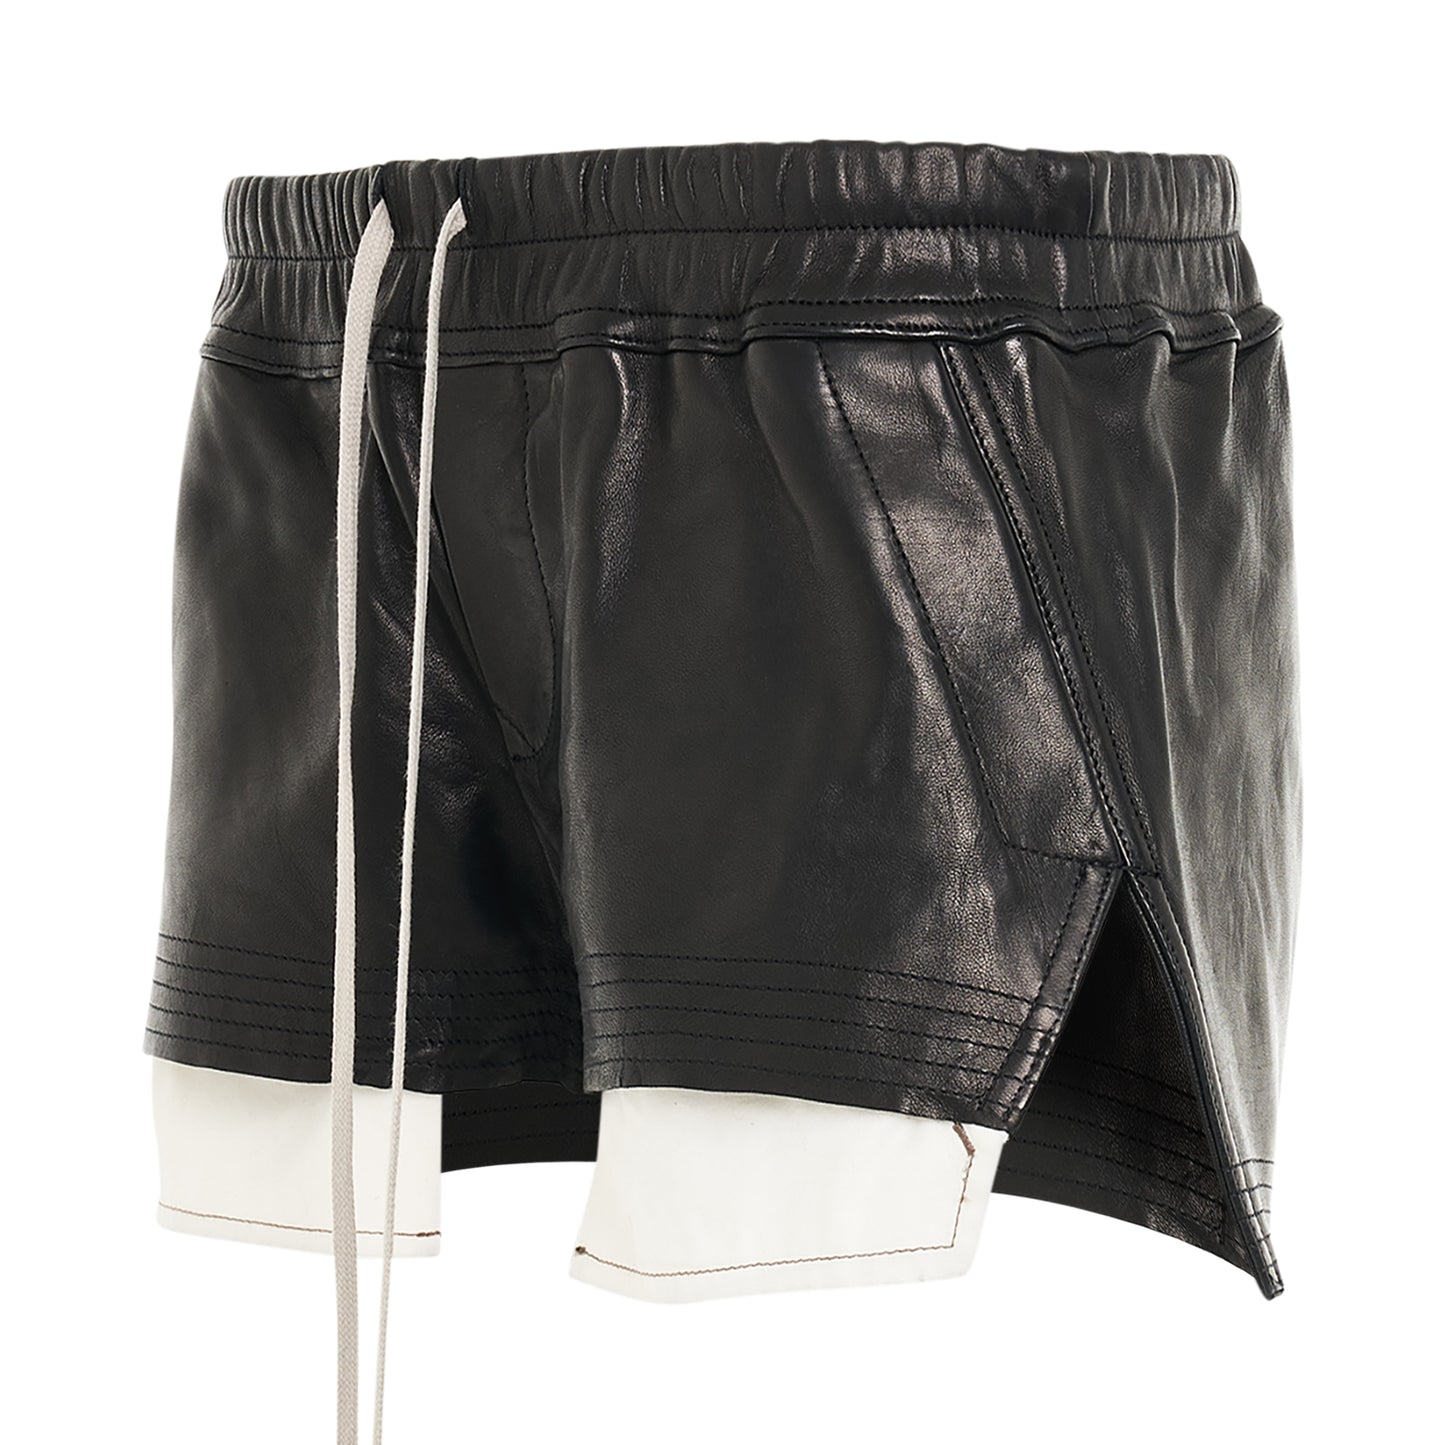 Fog Boxers Shorts in Black